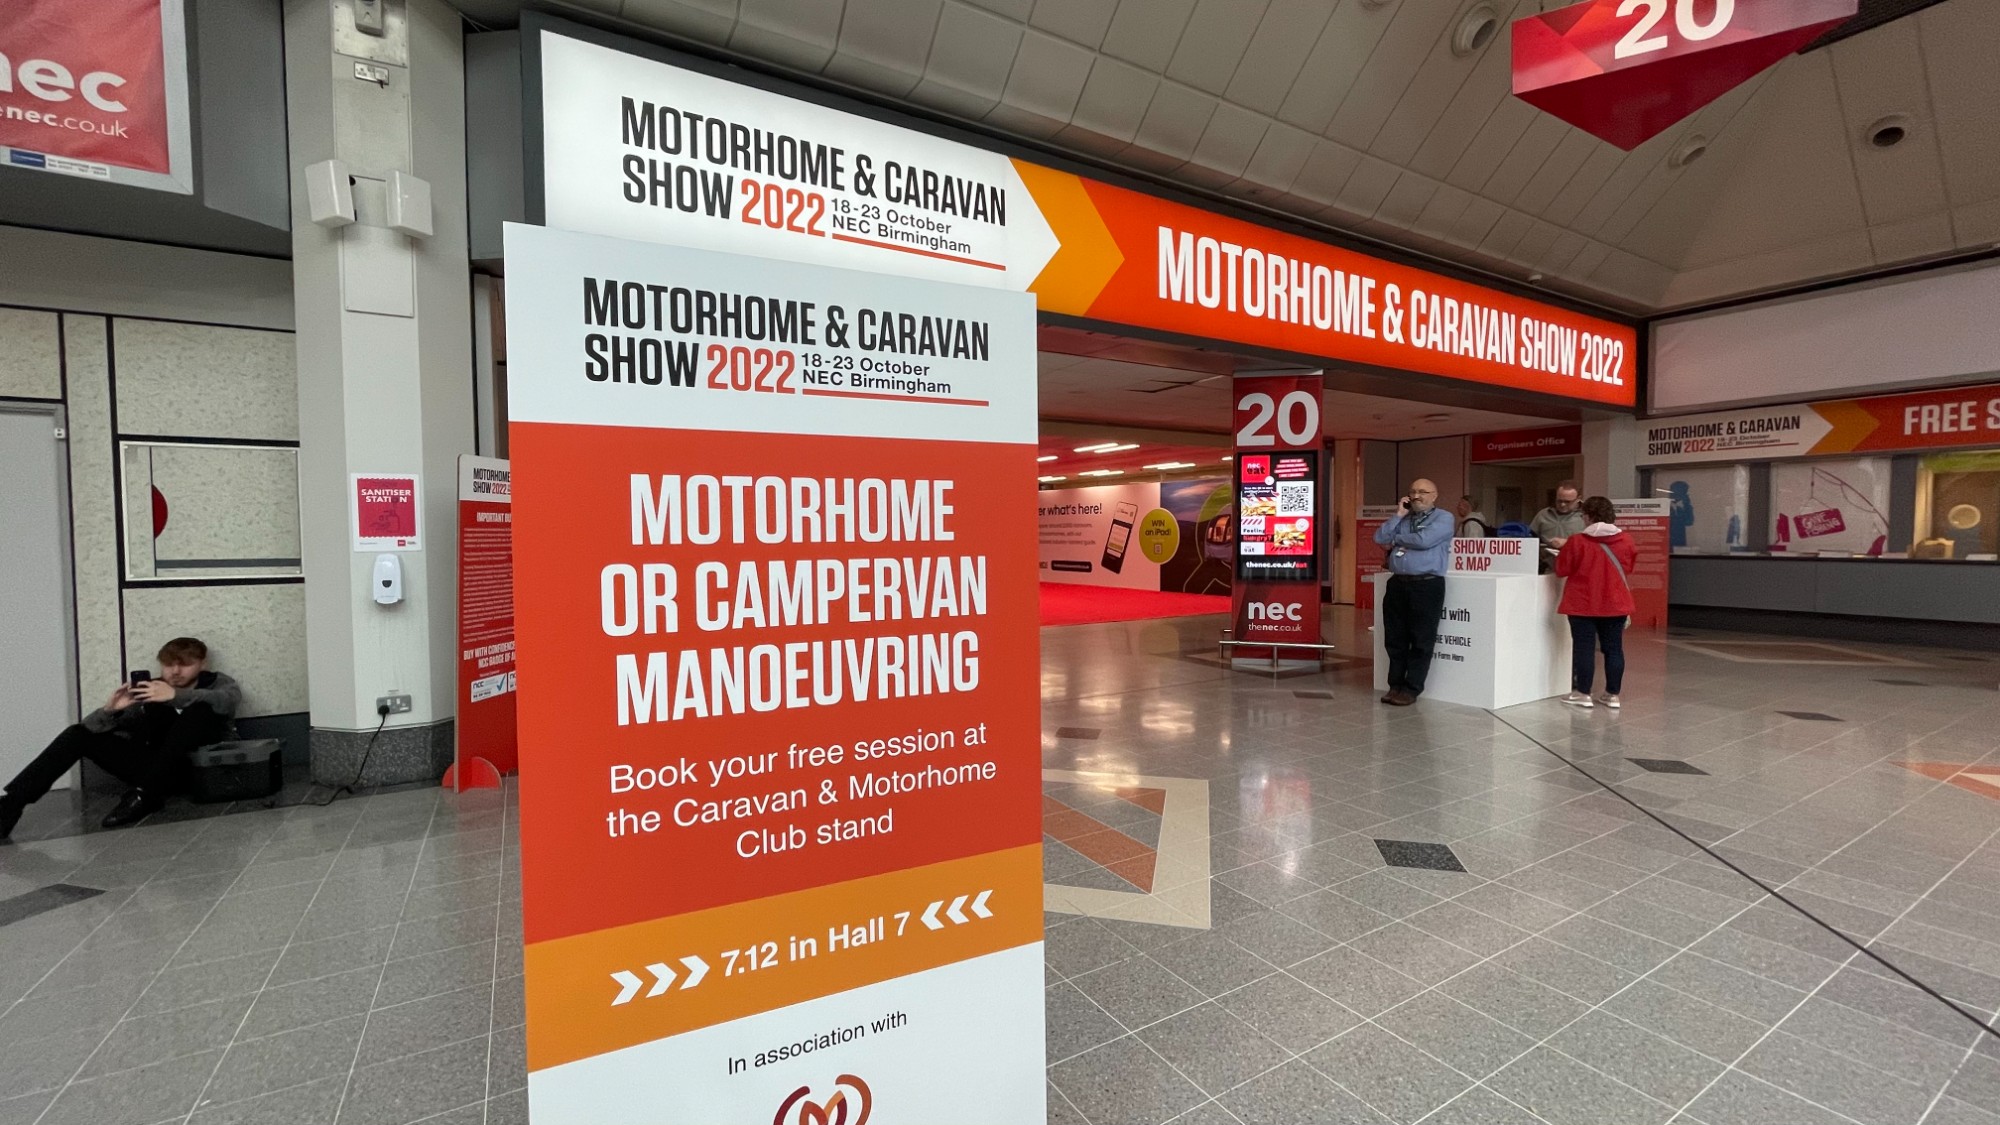 UK's Motorhome & Caravan Show at NEC Birmingham ended successfully